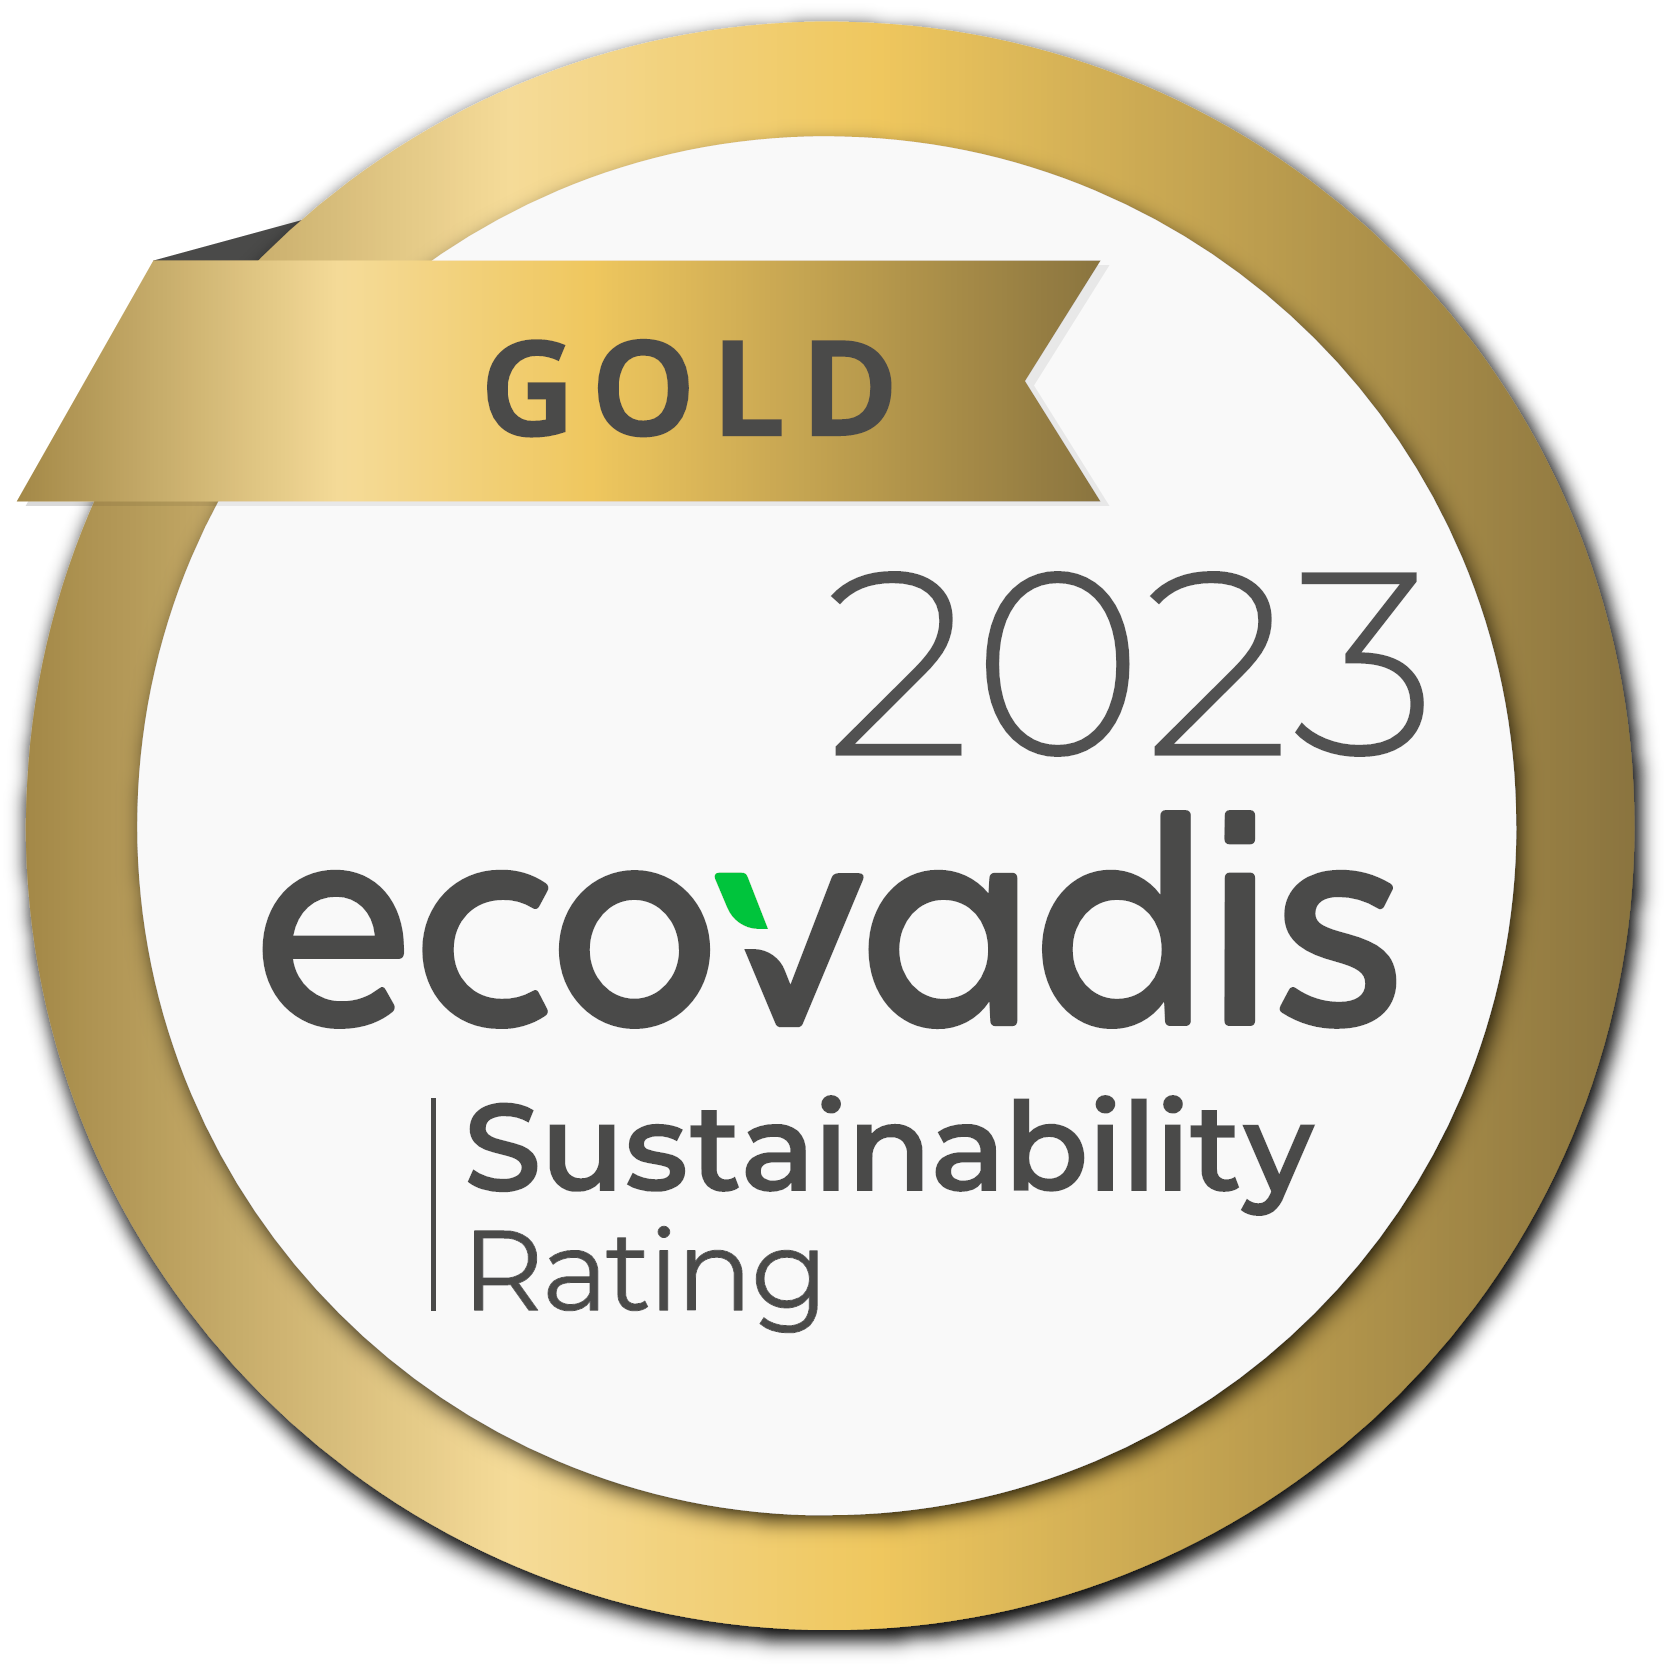 Kordsa receives Ecovadis gold award for sustainability